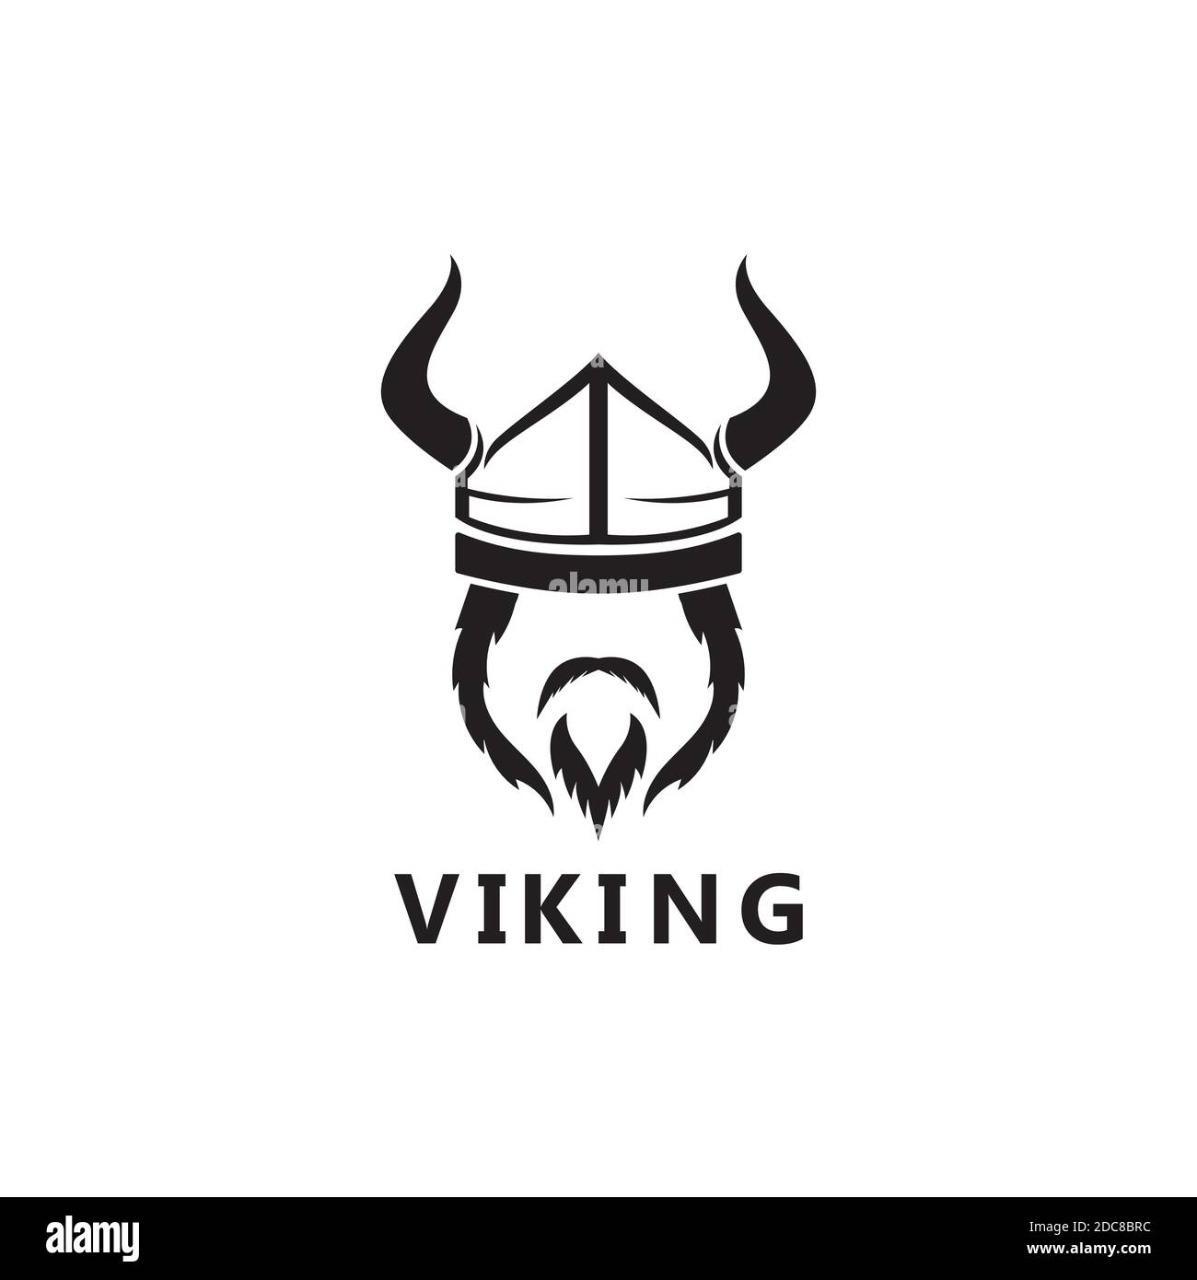 Vikingo95?s=yu3tb1fht1gwwetxcm4tzcyqy2fn+vz4gwq5tzmtgzc=